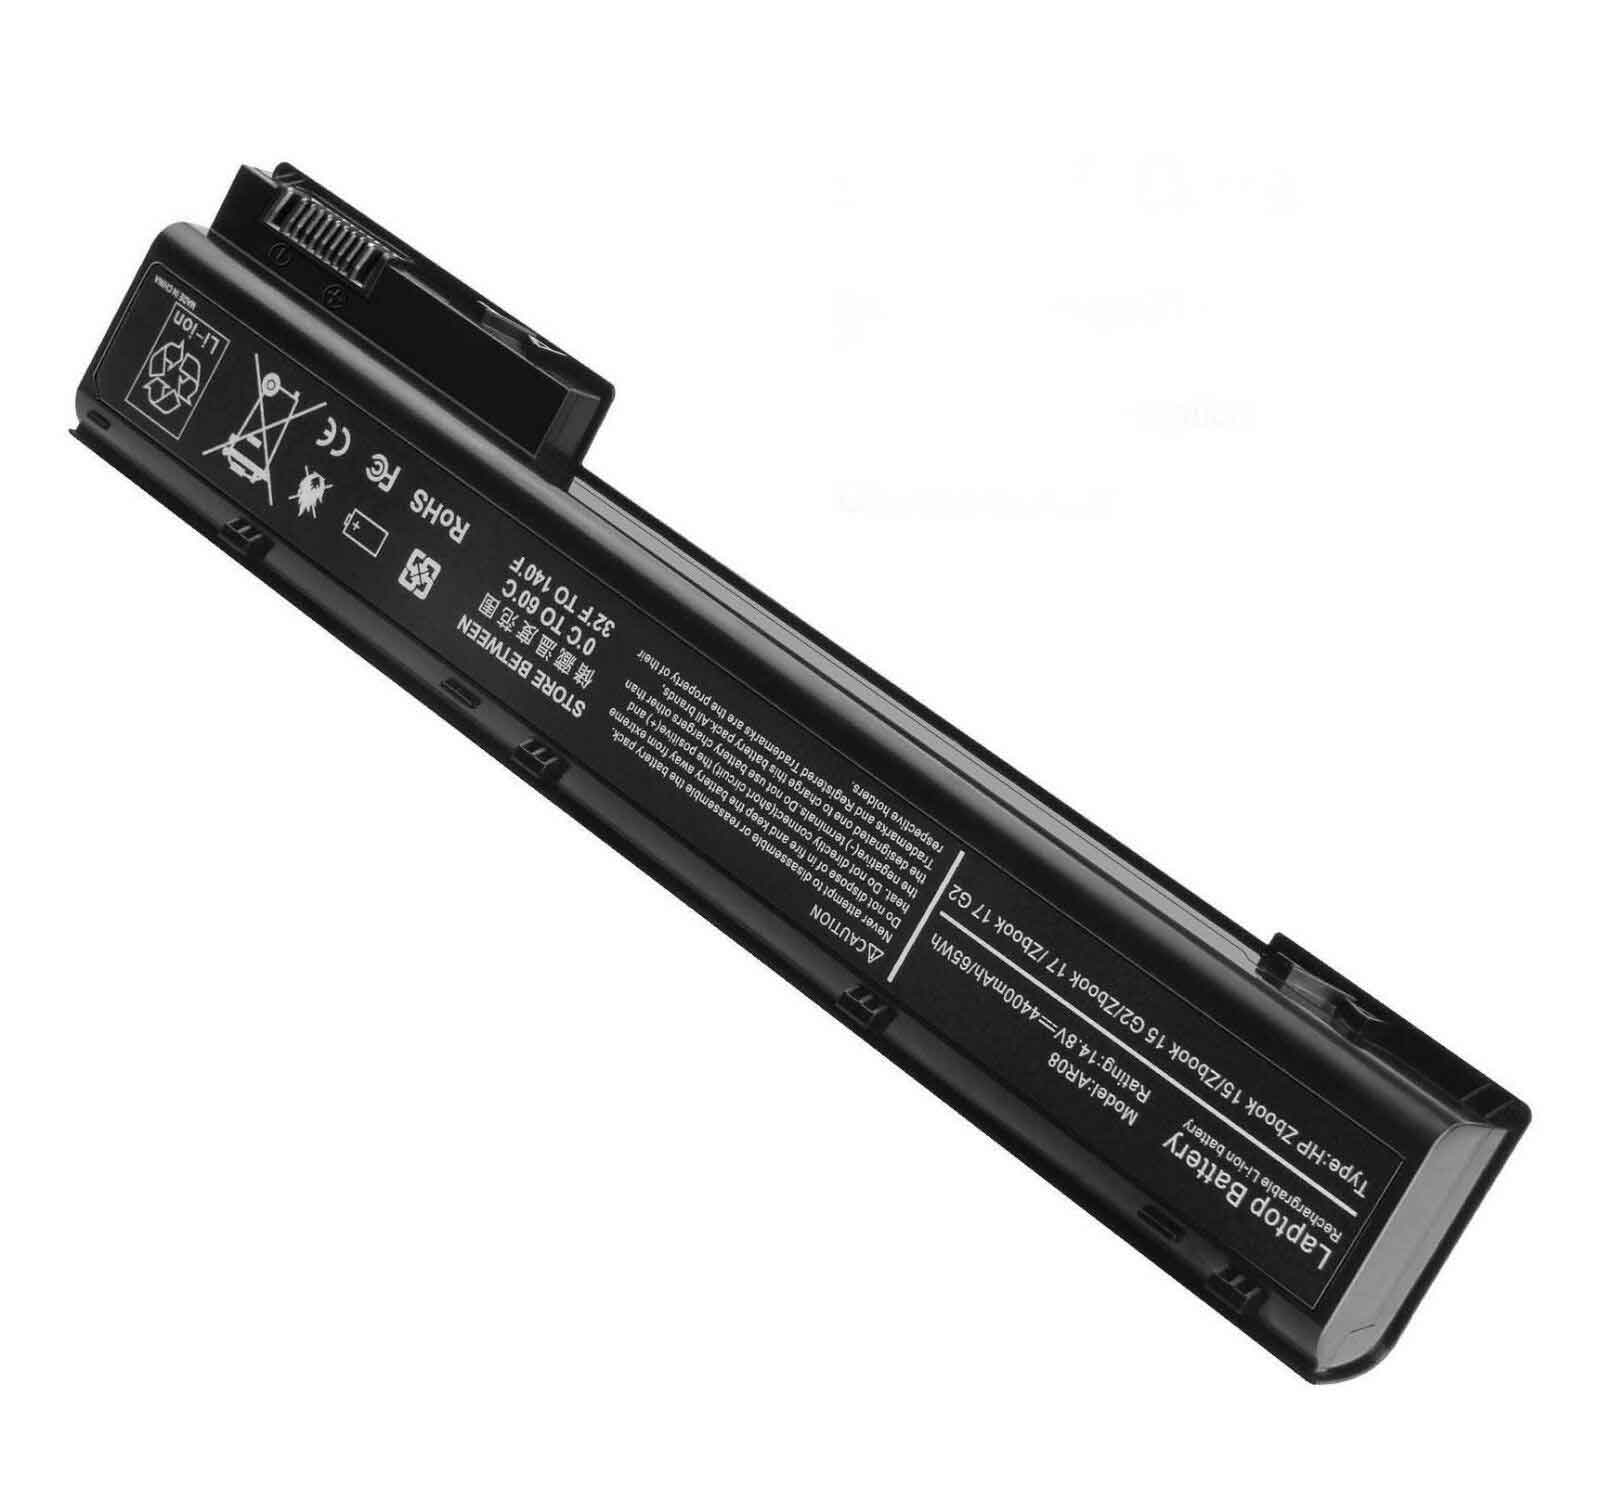 batterie HP 707614-121, batteries HP 707614-121